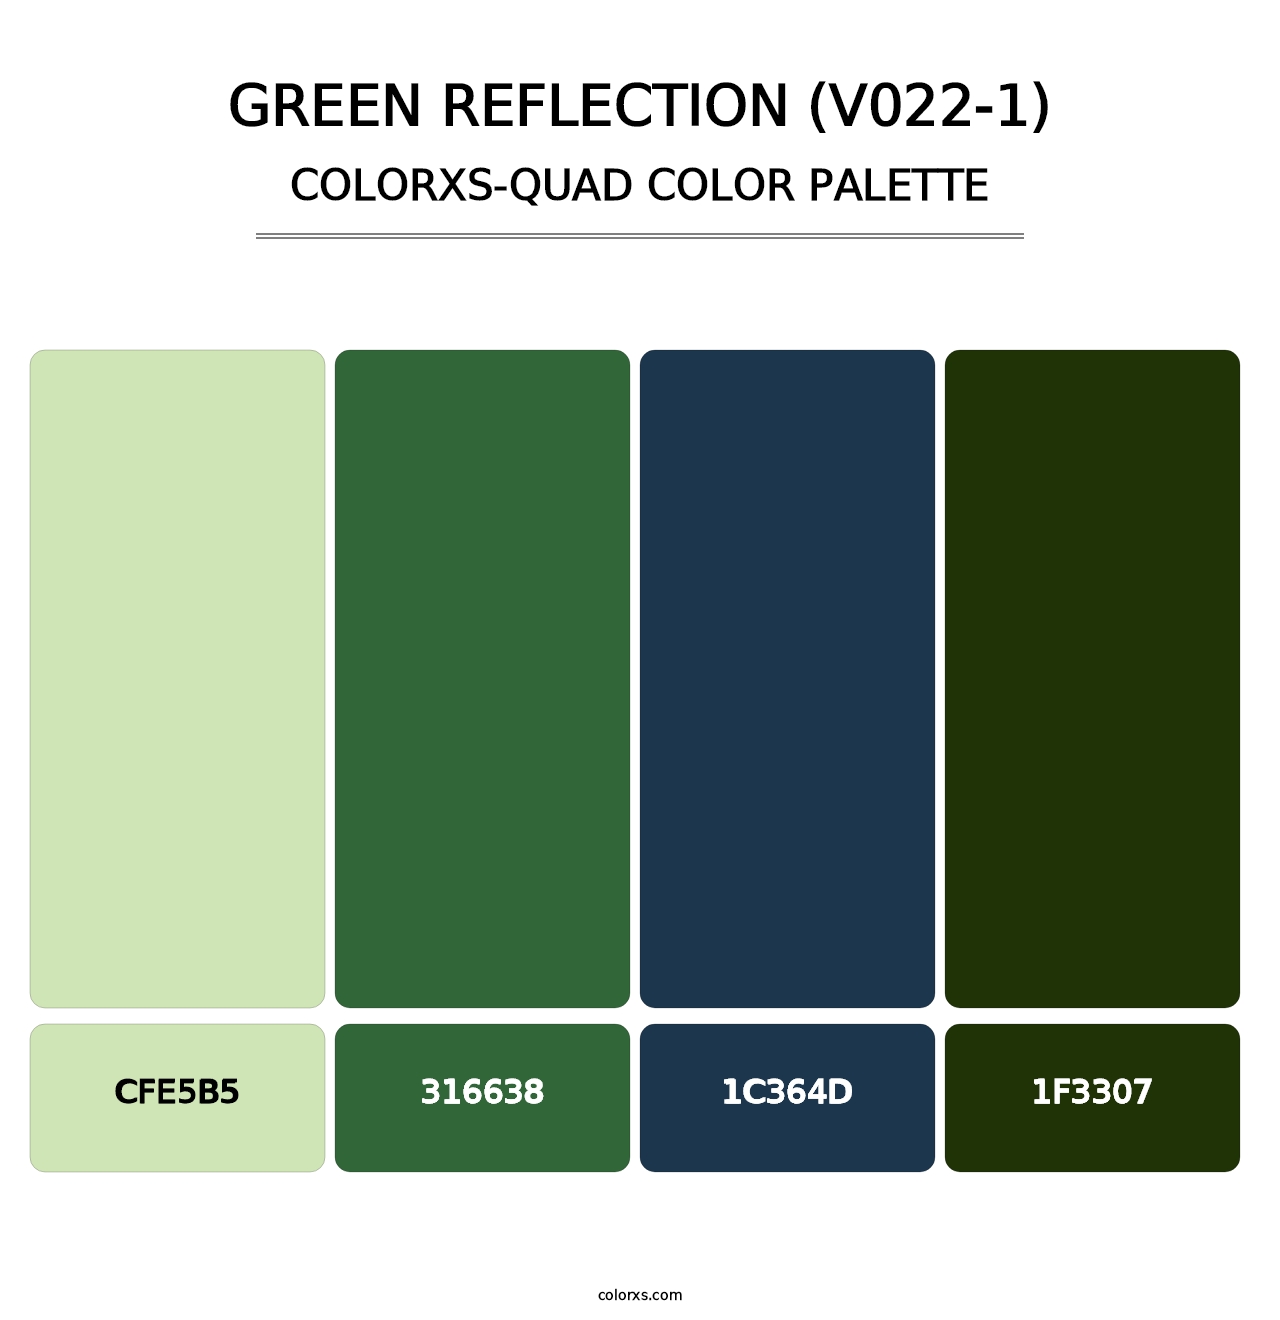 Green Reflection (V022-1) - Colorxs Quad Palette